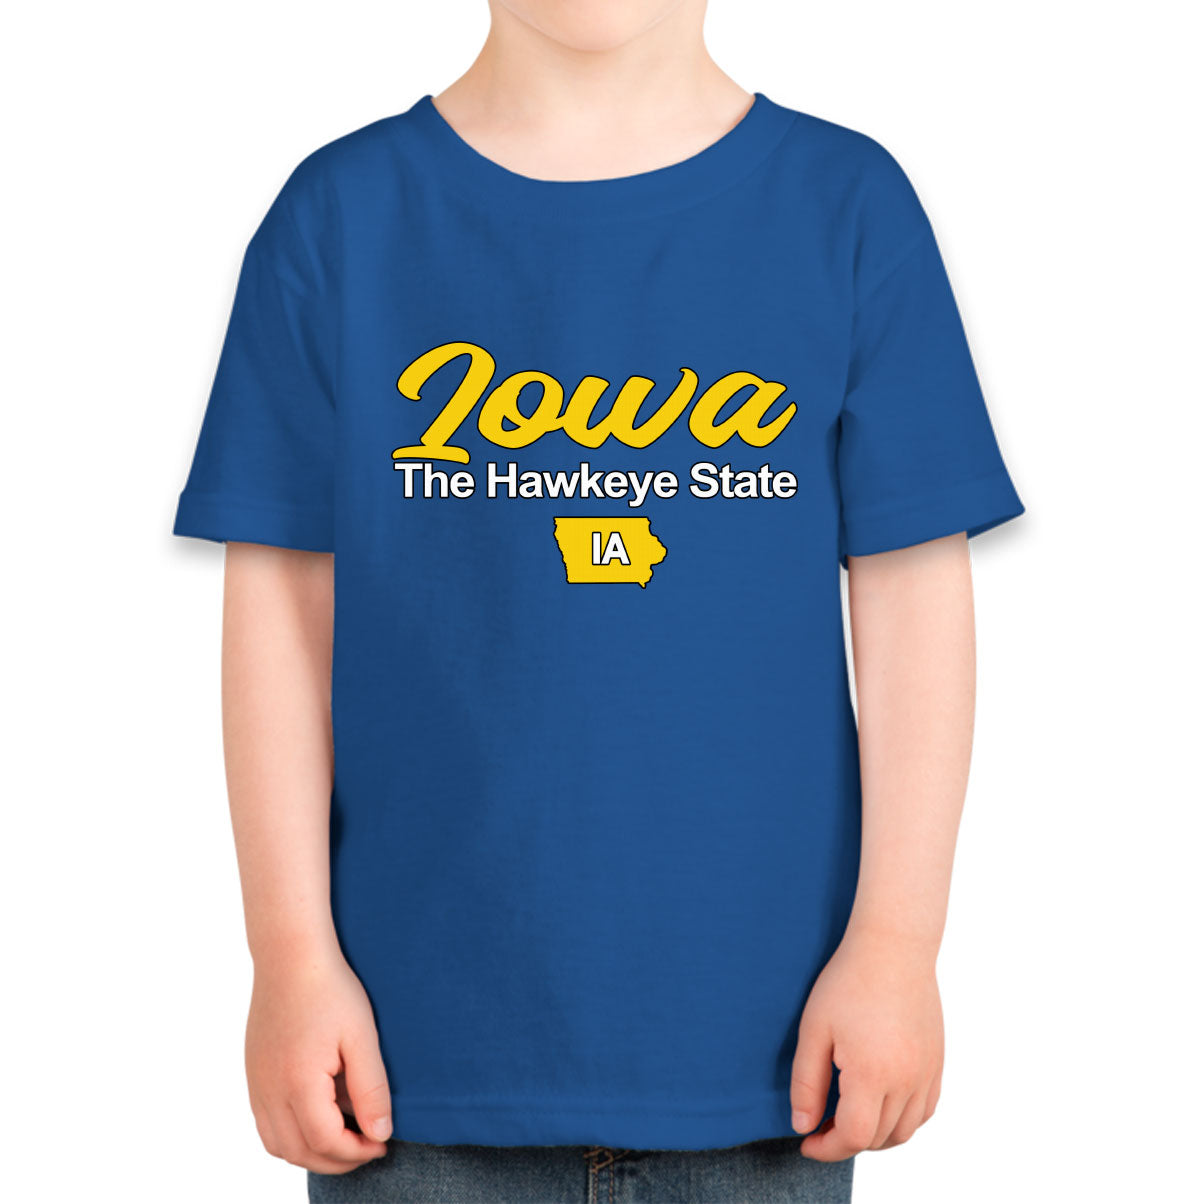 Iowa The Hawkeye State Toddler T-shirt